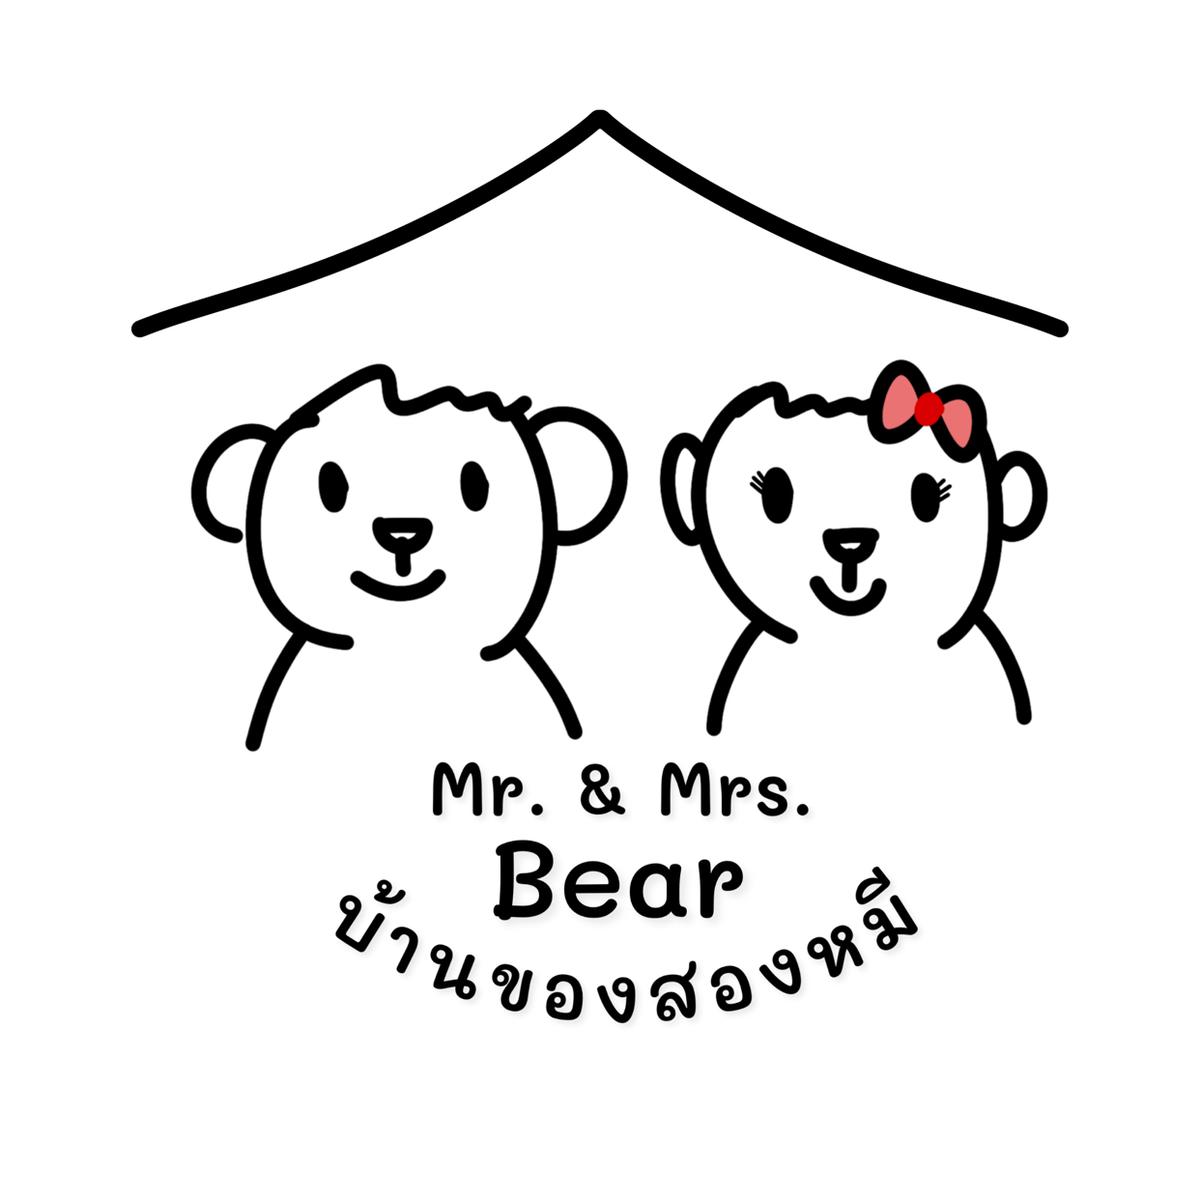 Mr. & Mrs. Bear